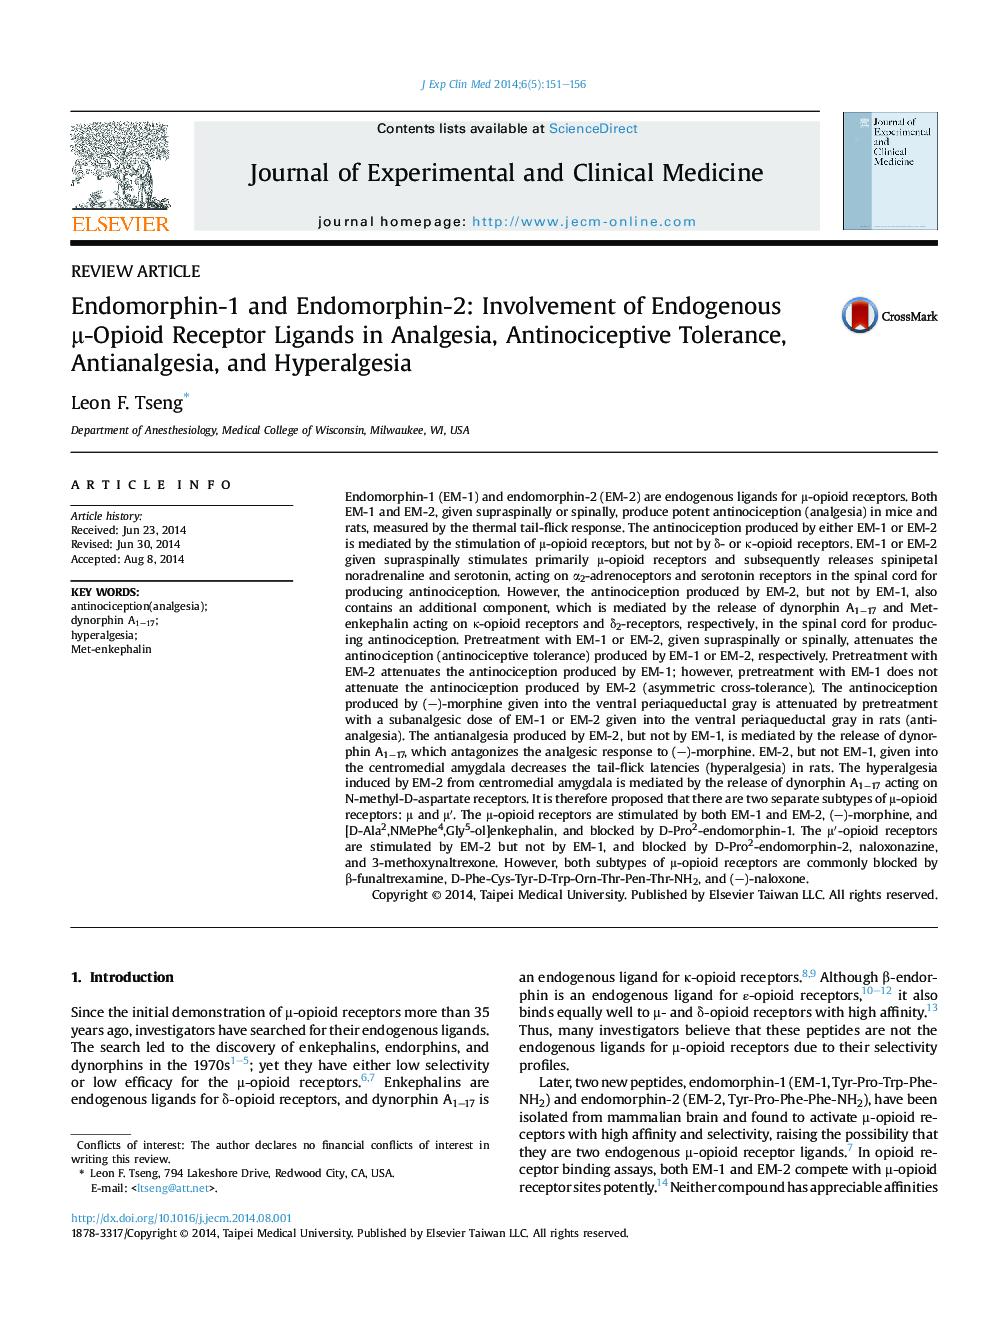 Endomorphin-1 and Endomorphin-2: Involvement of Endogenous μ-Opioid Receptor Ligands in Analgesia, Antinociceptive Tolerance, Antianalgesia, and Hyperalgesia 